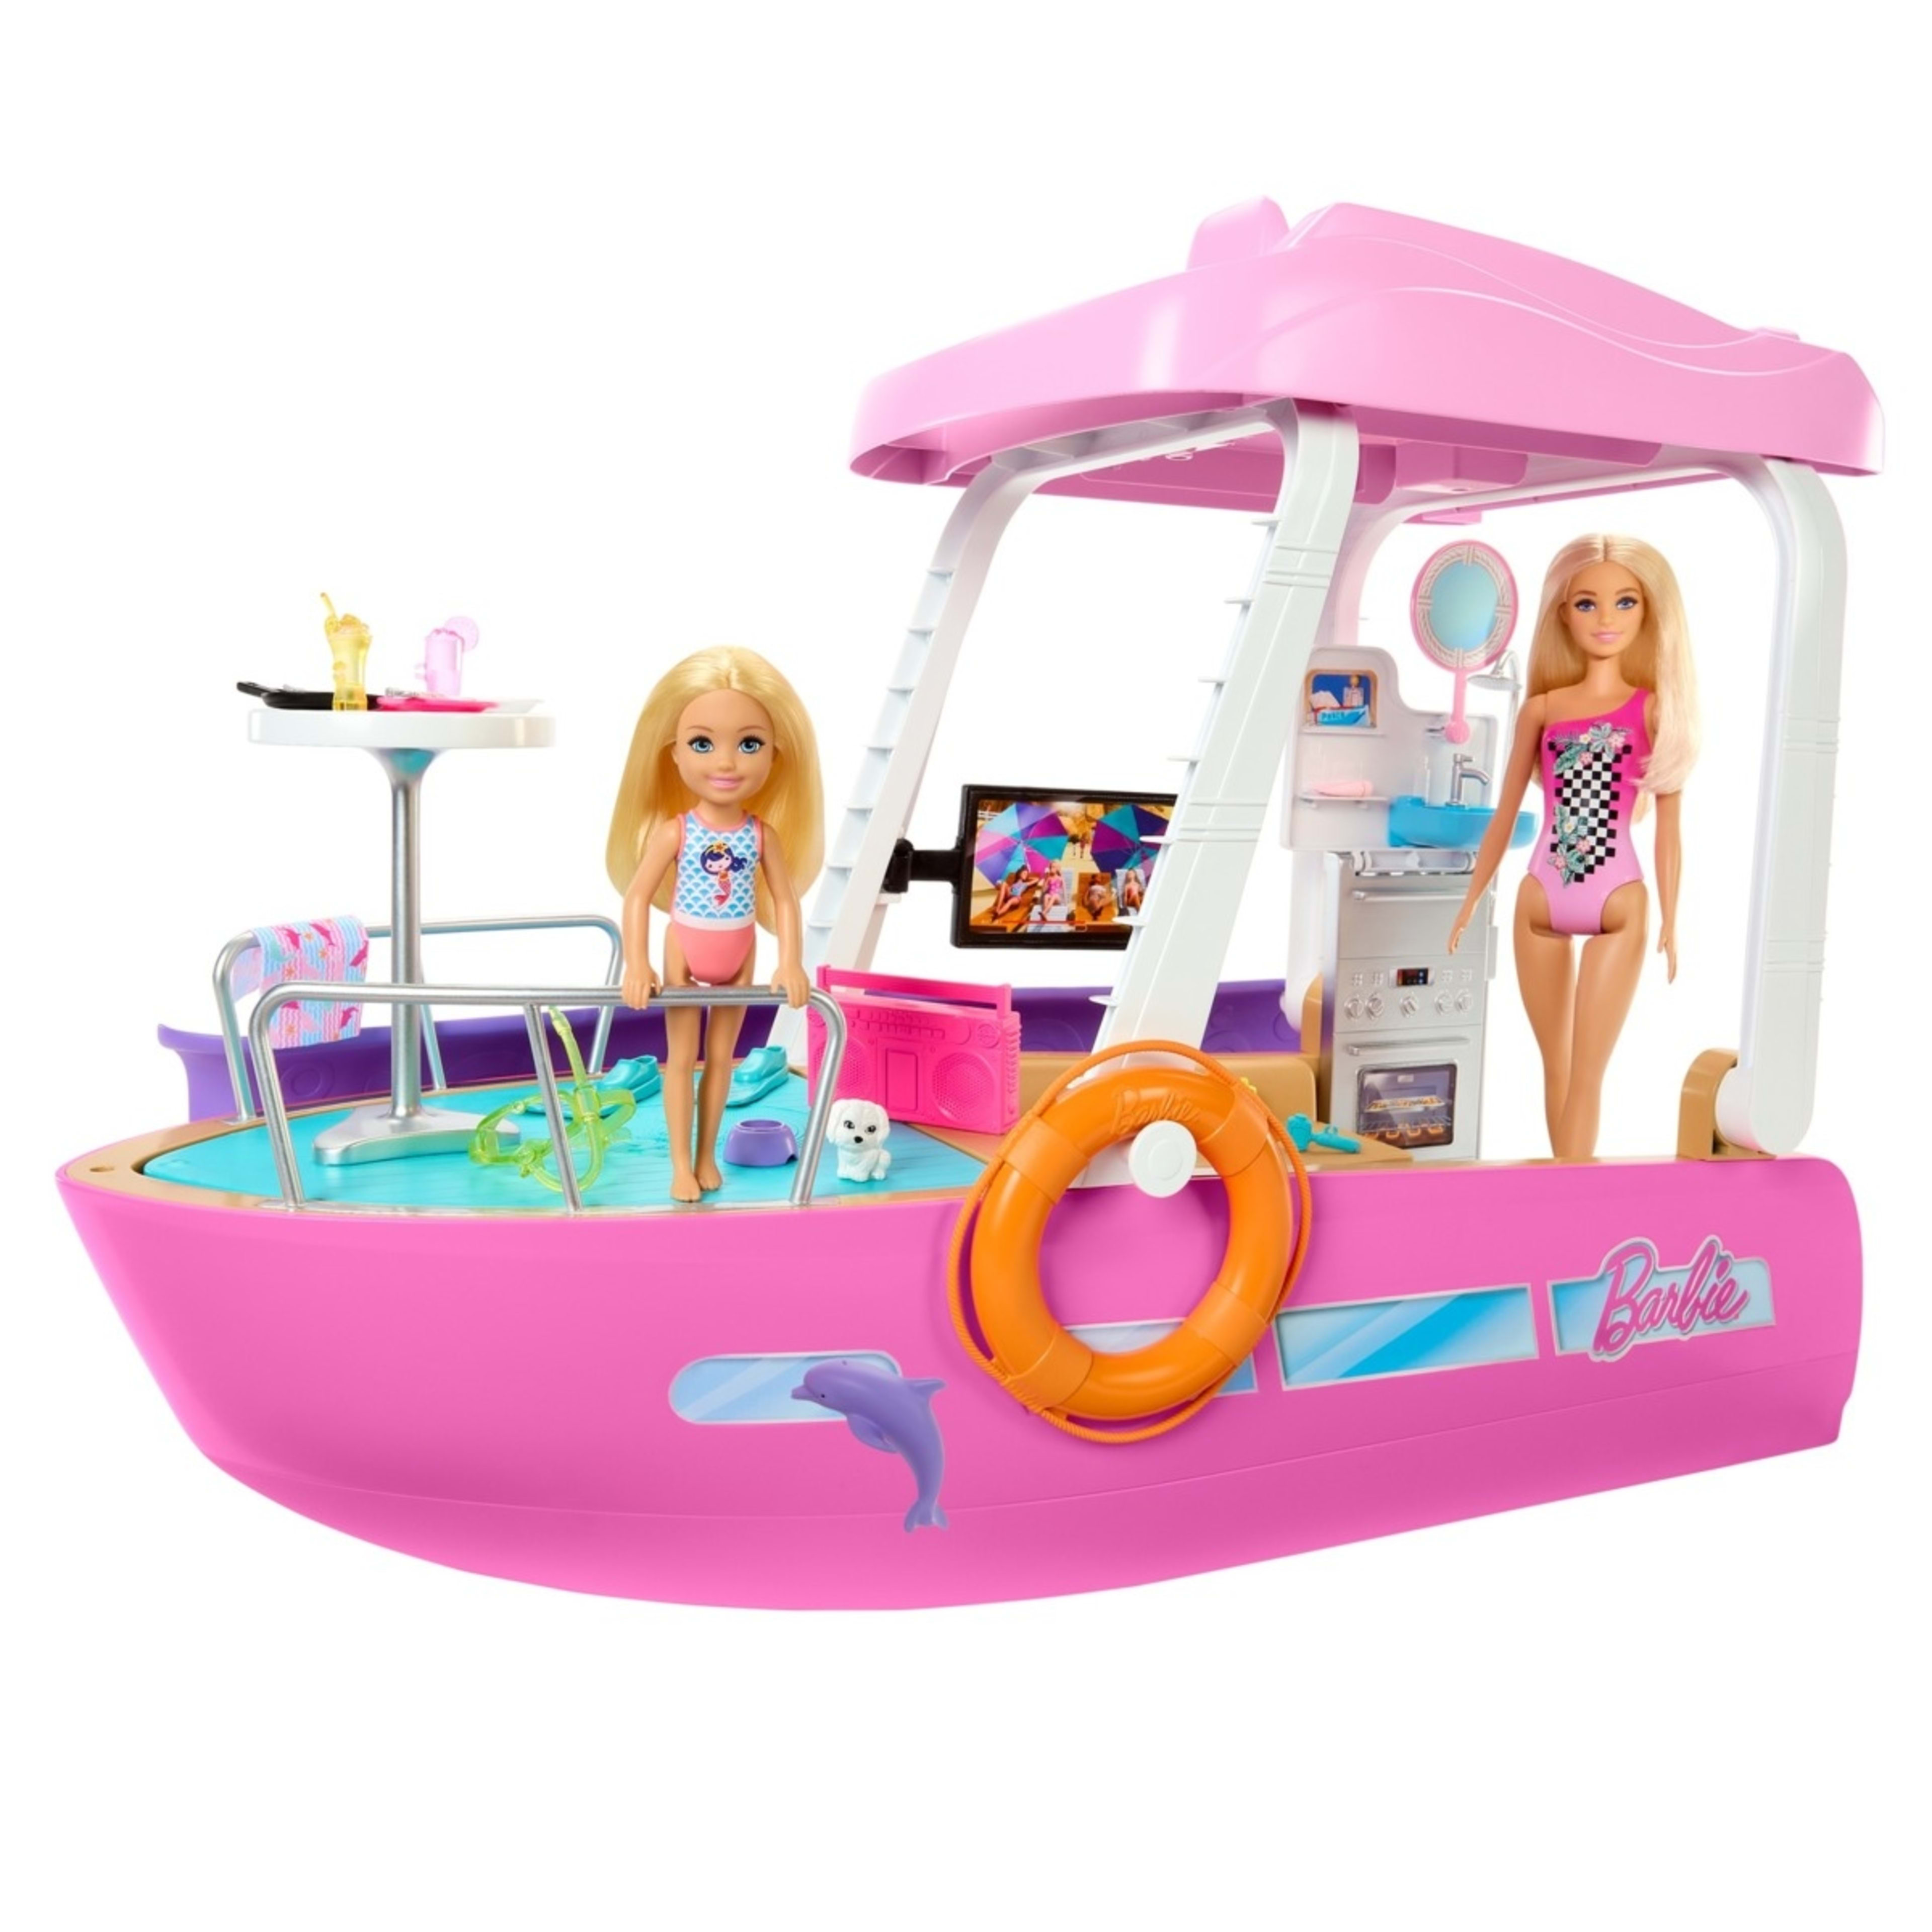 Barbie Dream Boat Playset Kmart